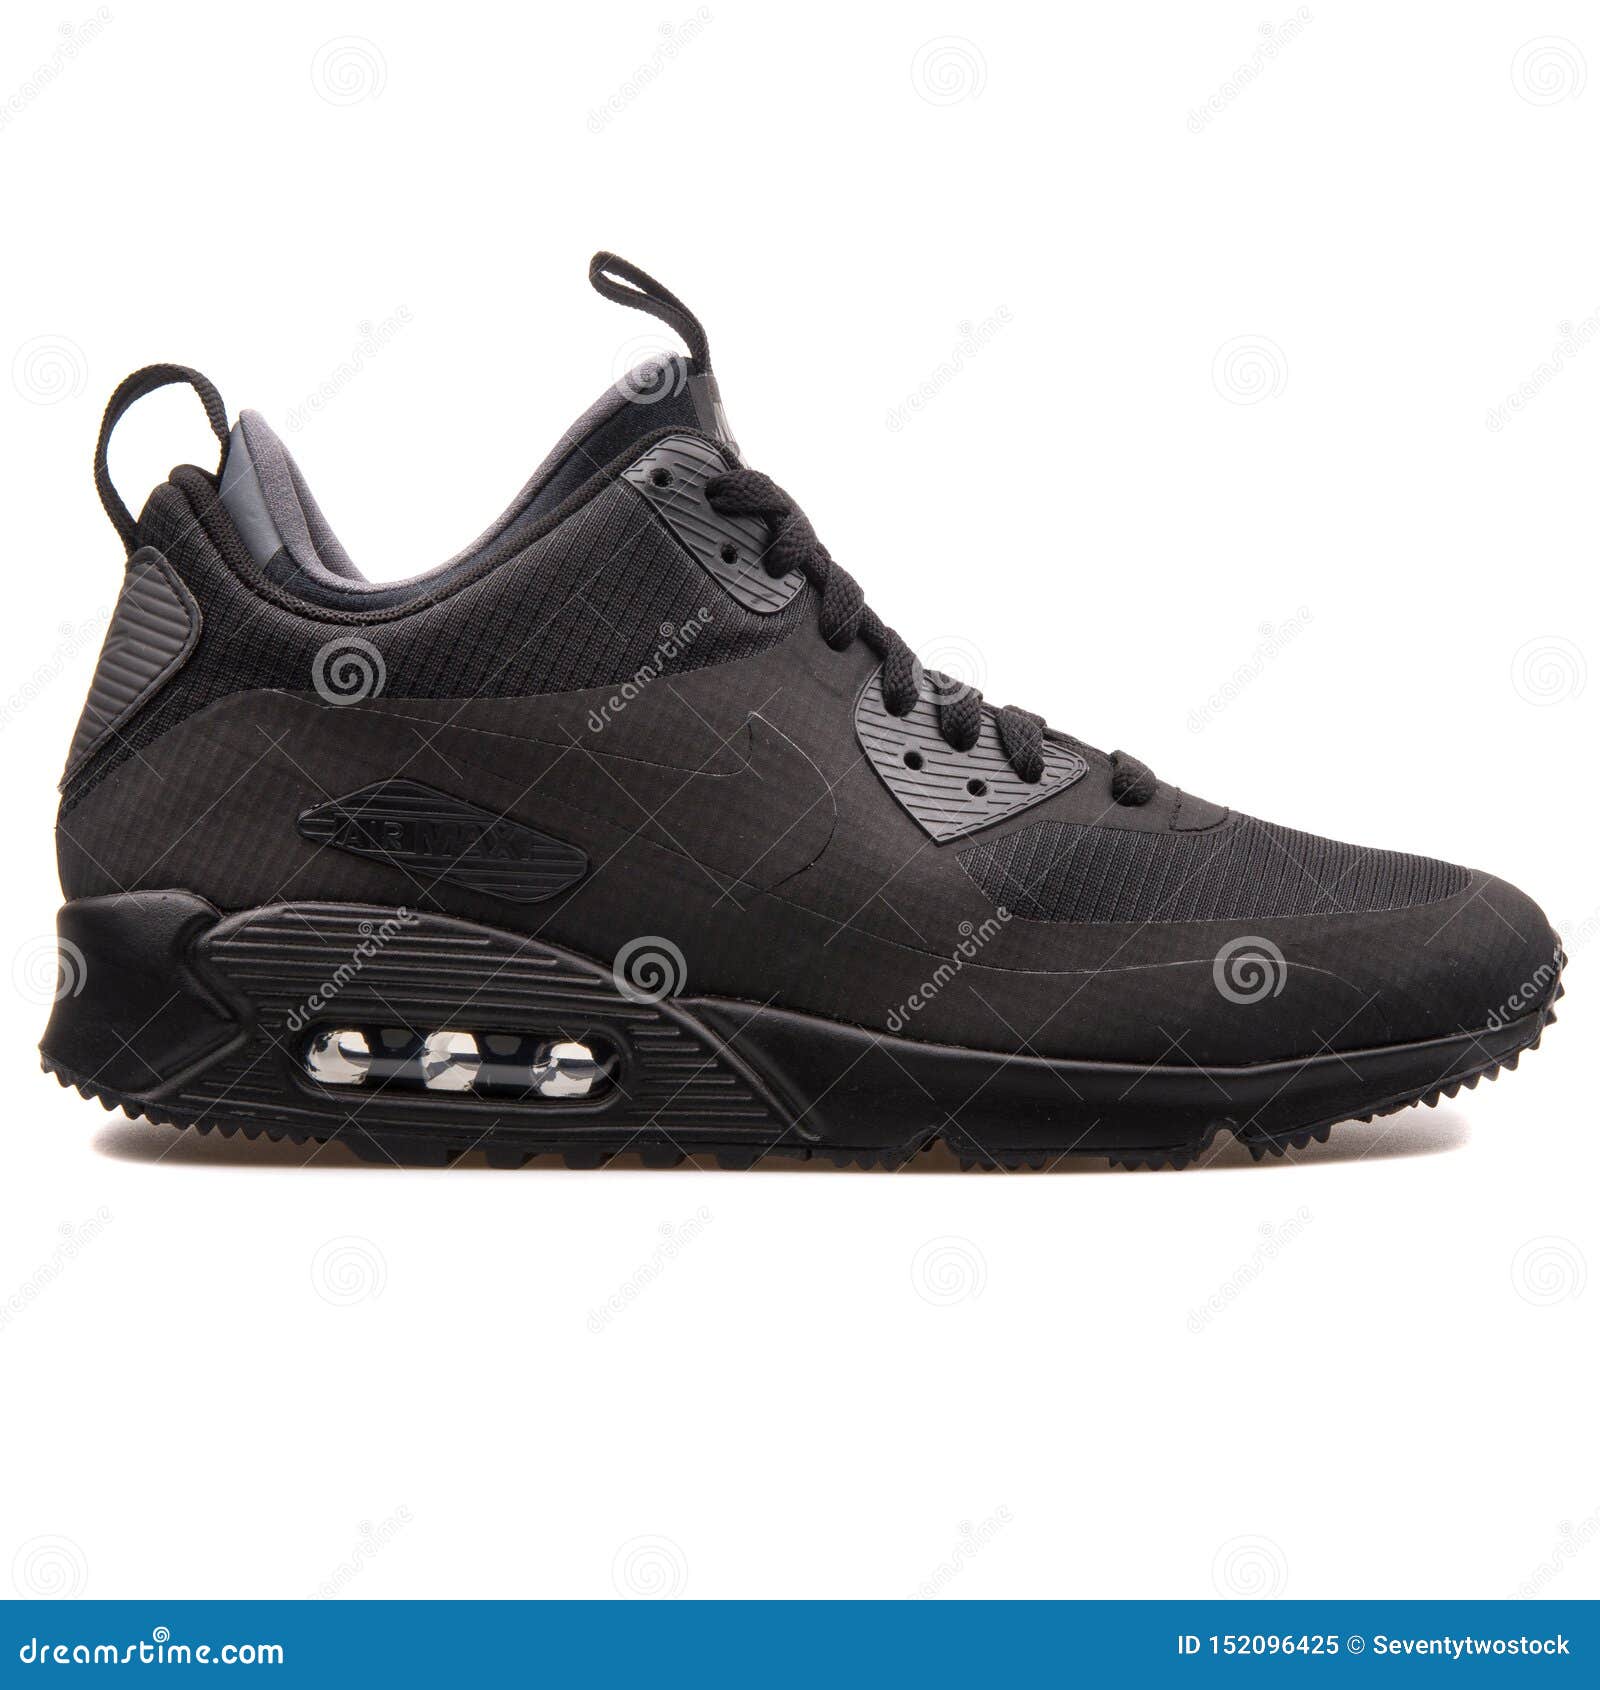 Nike Air Max 90 Mid Winter Black Sneaker Editorial Image Image of sneakers: 152096425